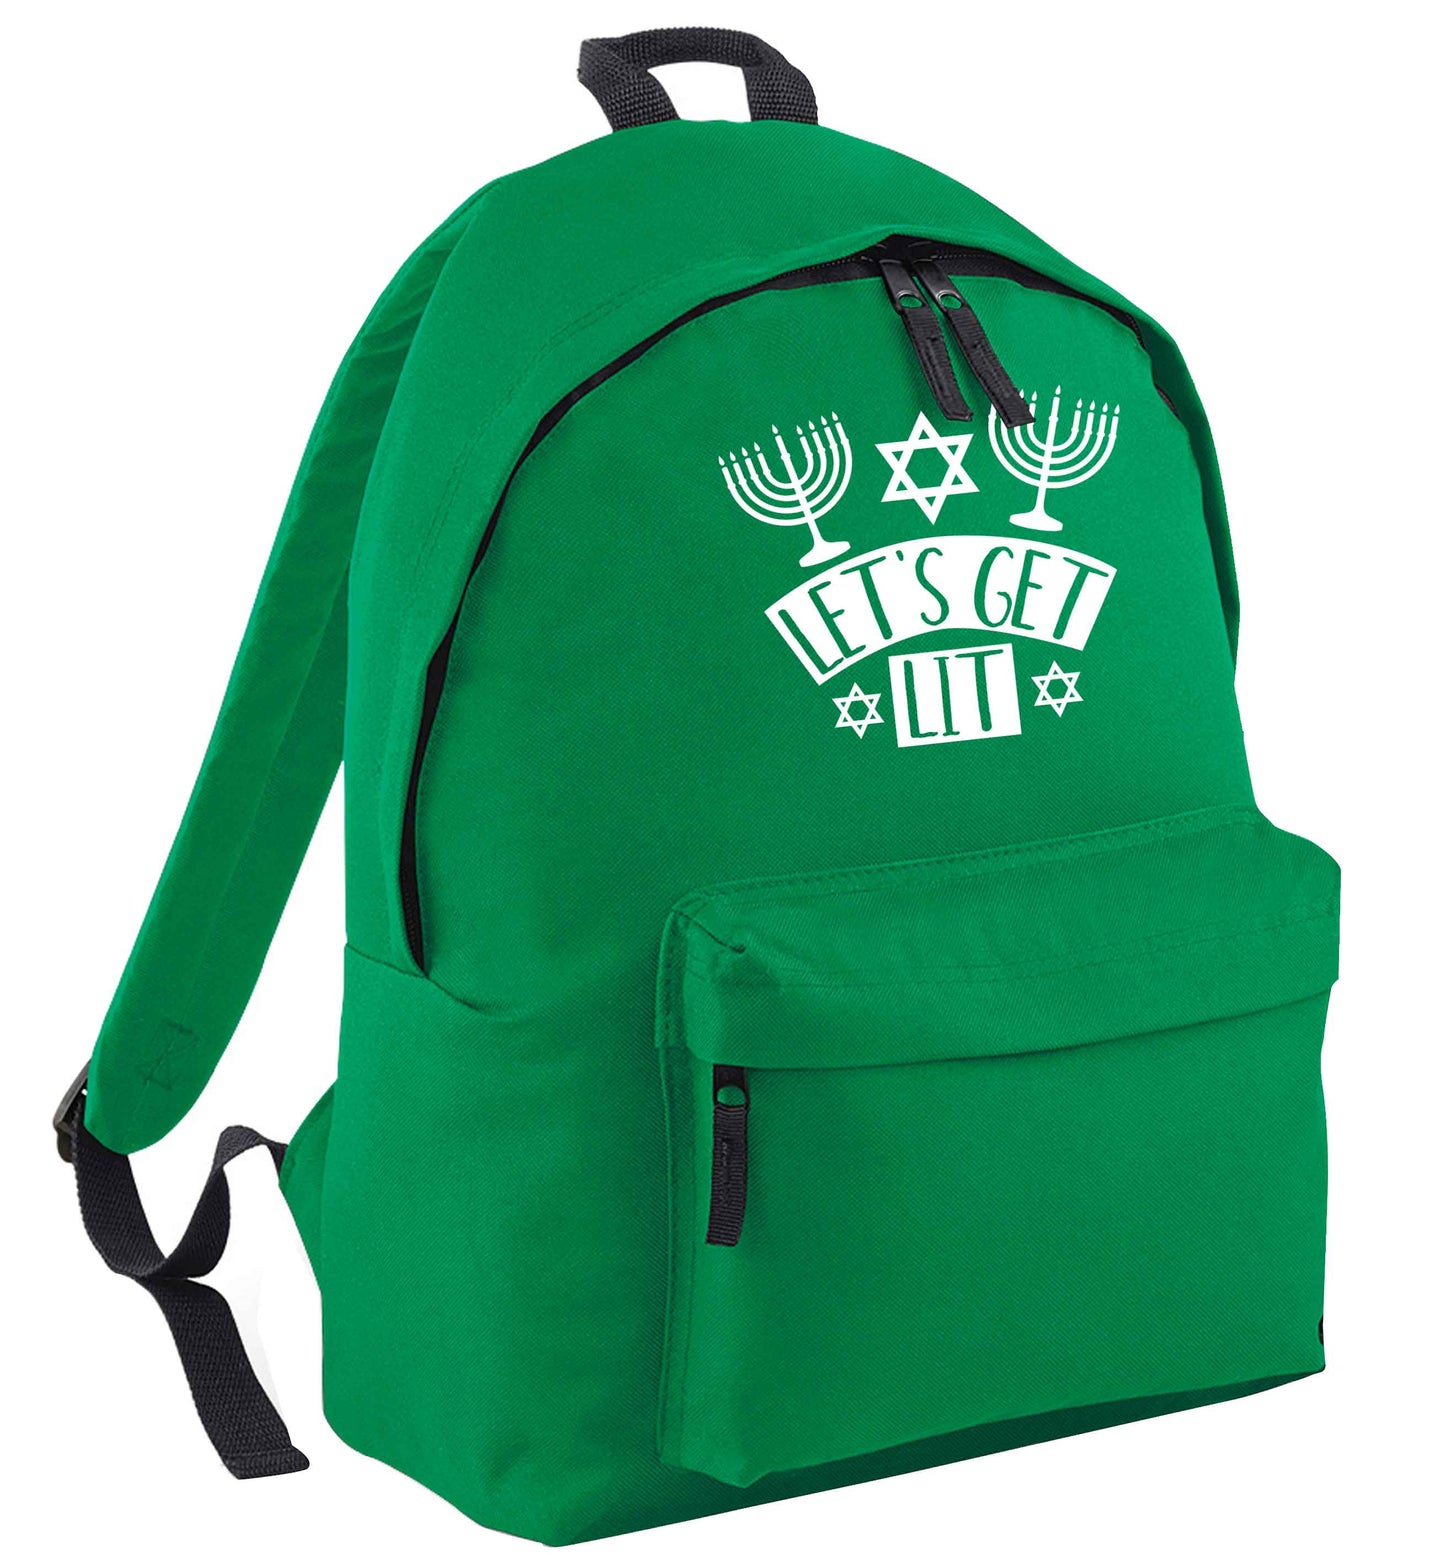 Let's get lit green adults backpack